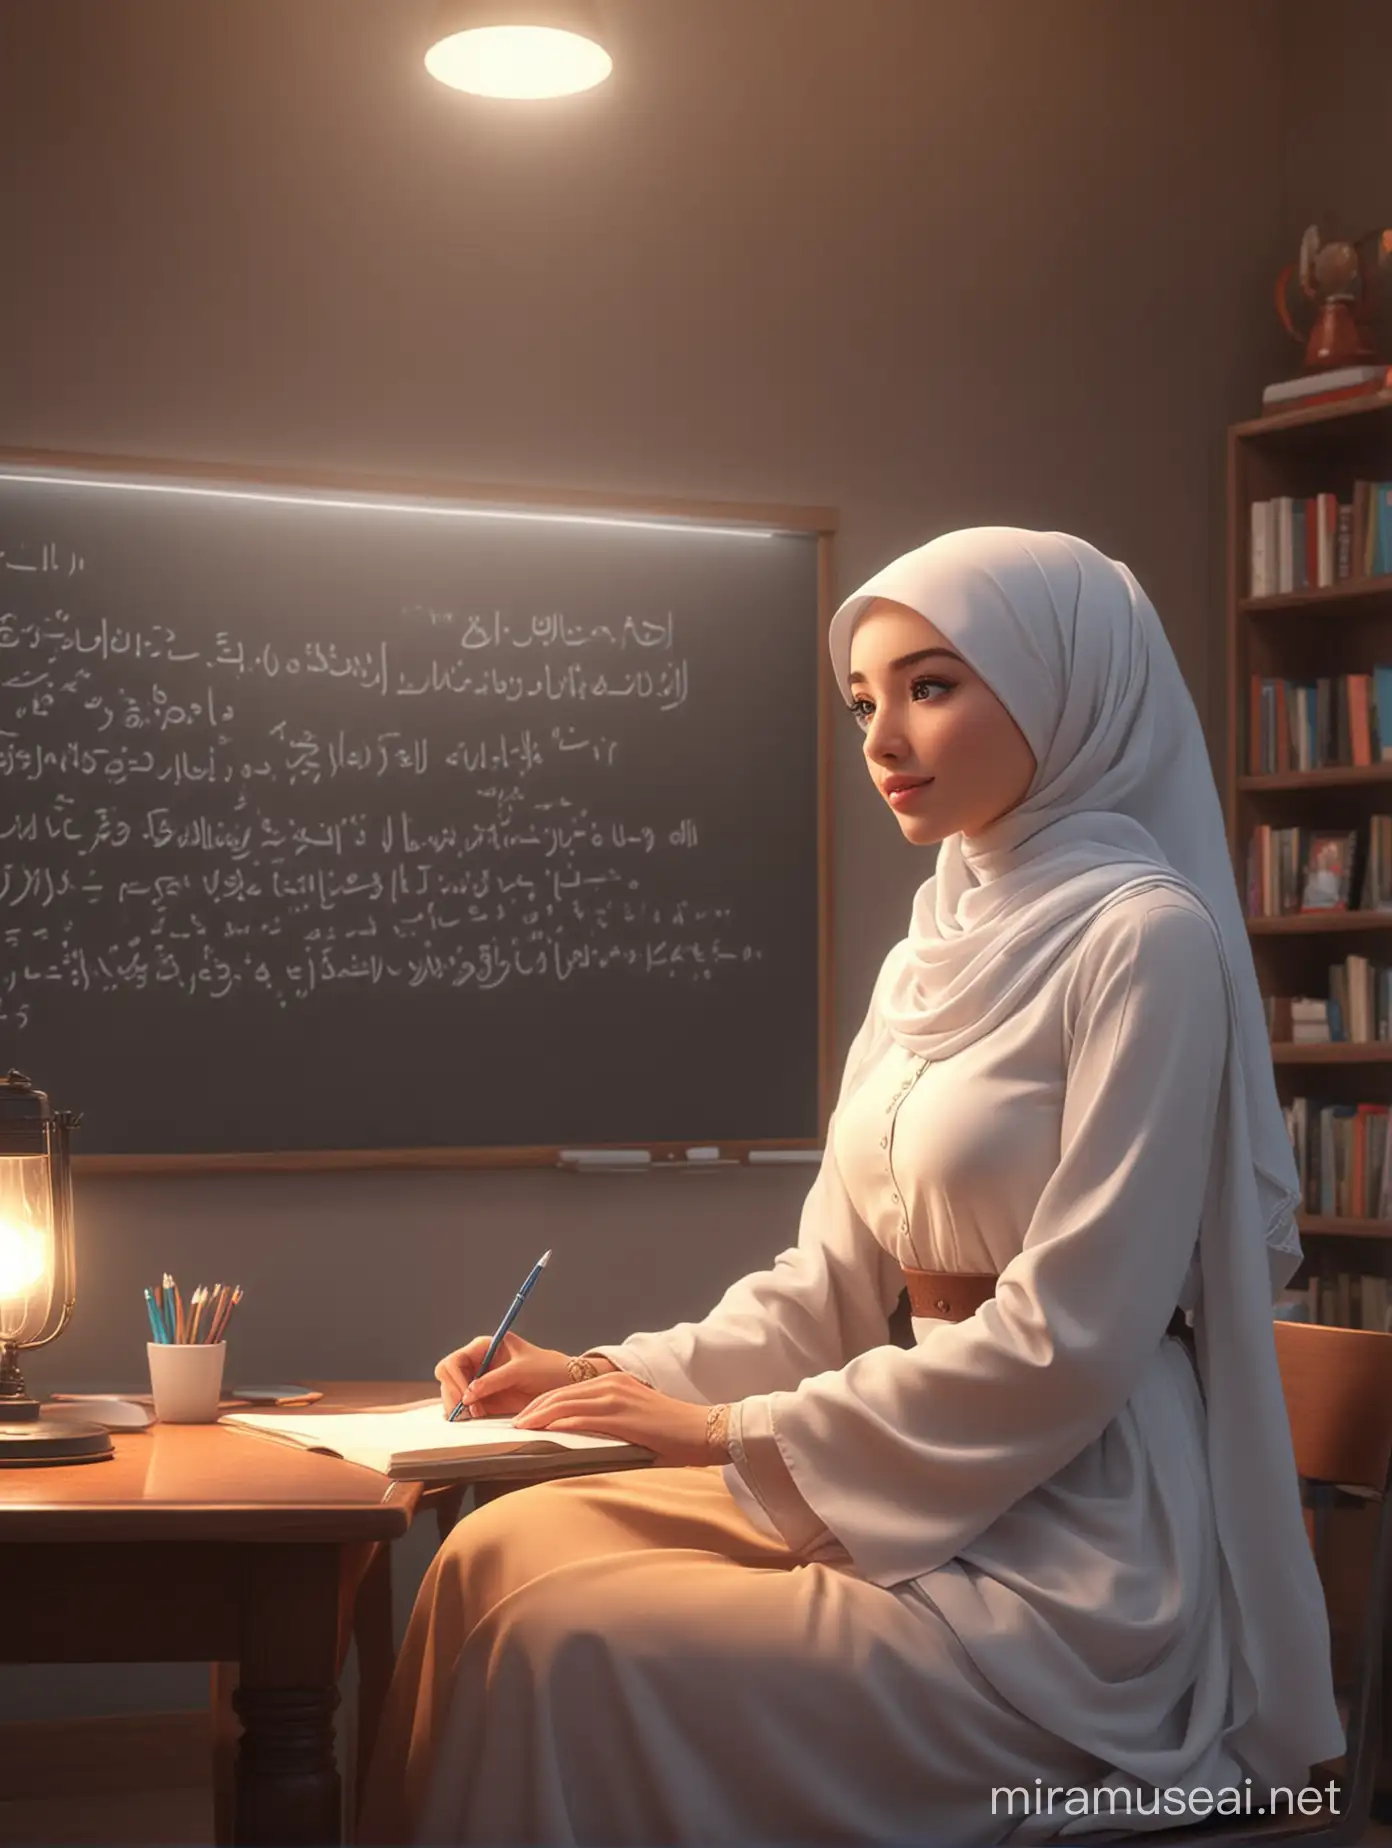 Stylish Woman in Hijab Studying with Blackboard in Anime Study Room